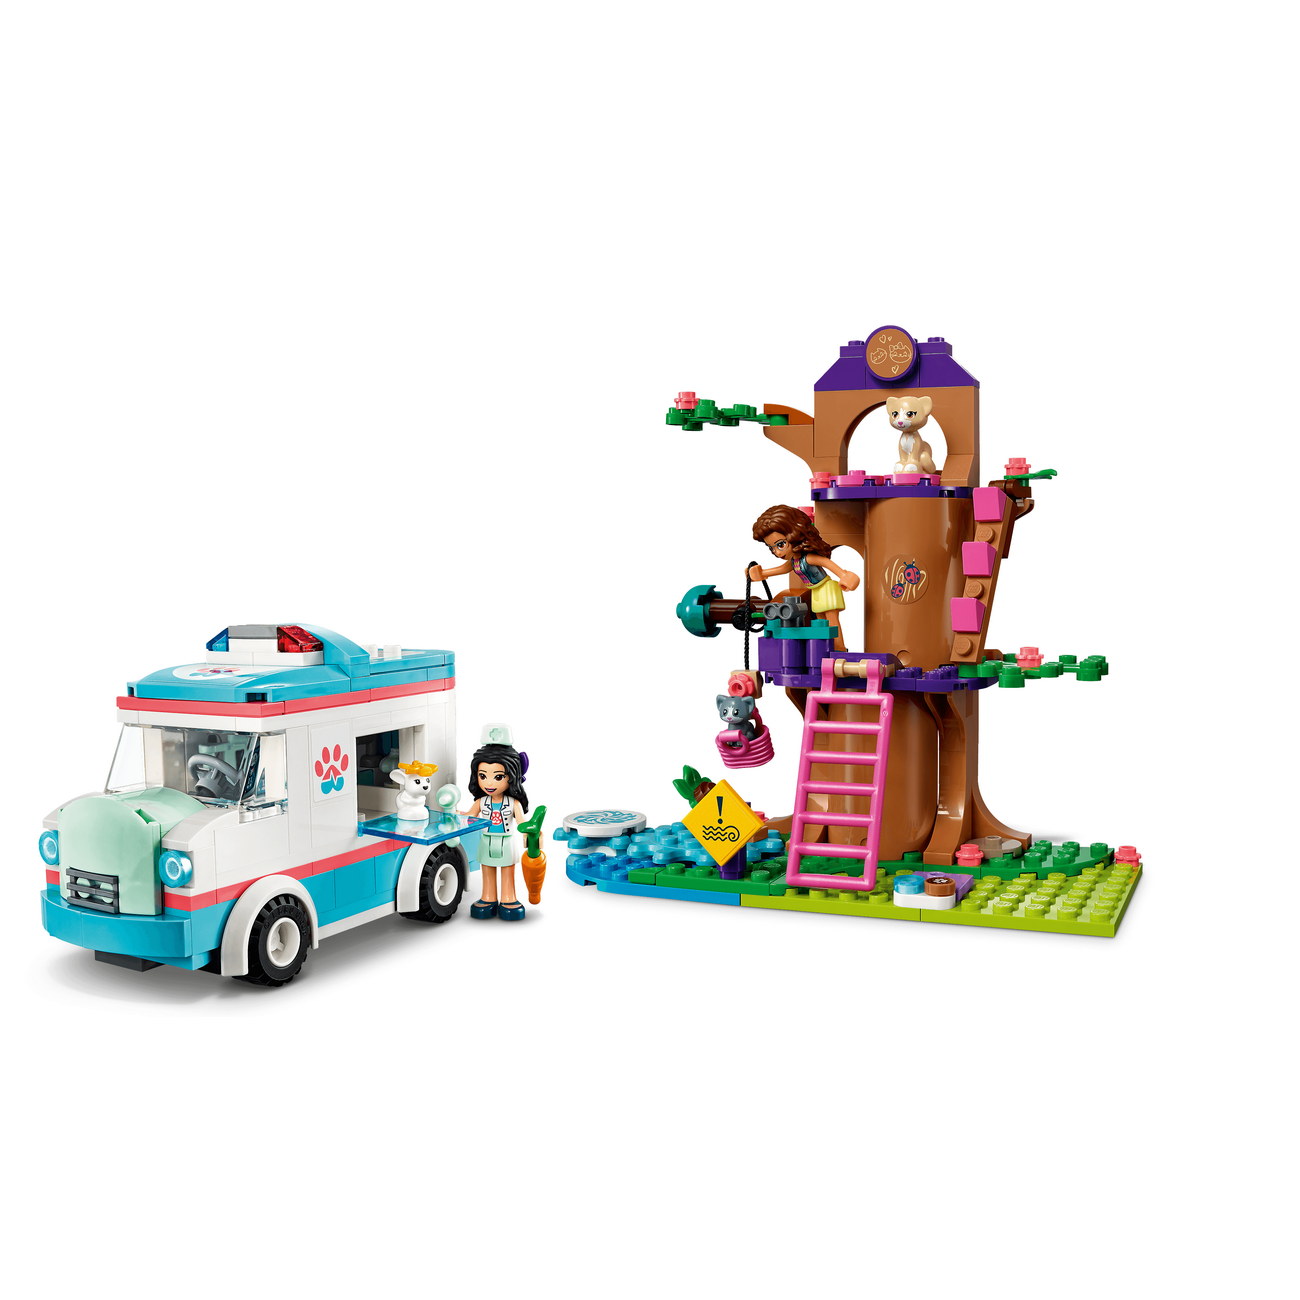 LEGO Friends 41445 - Tierrettungswagen